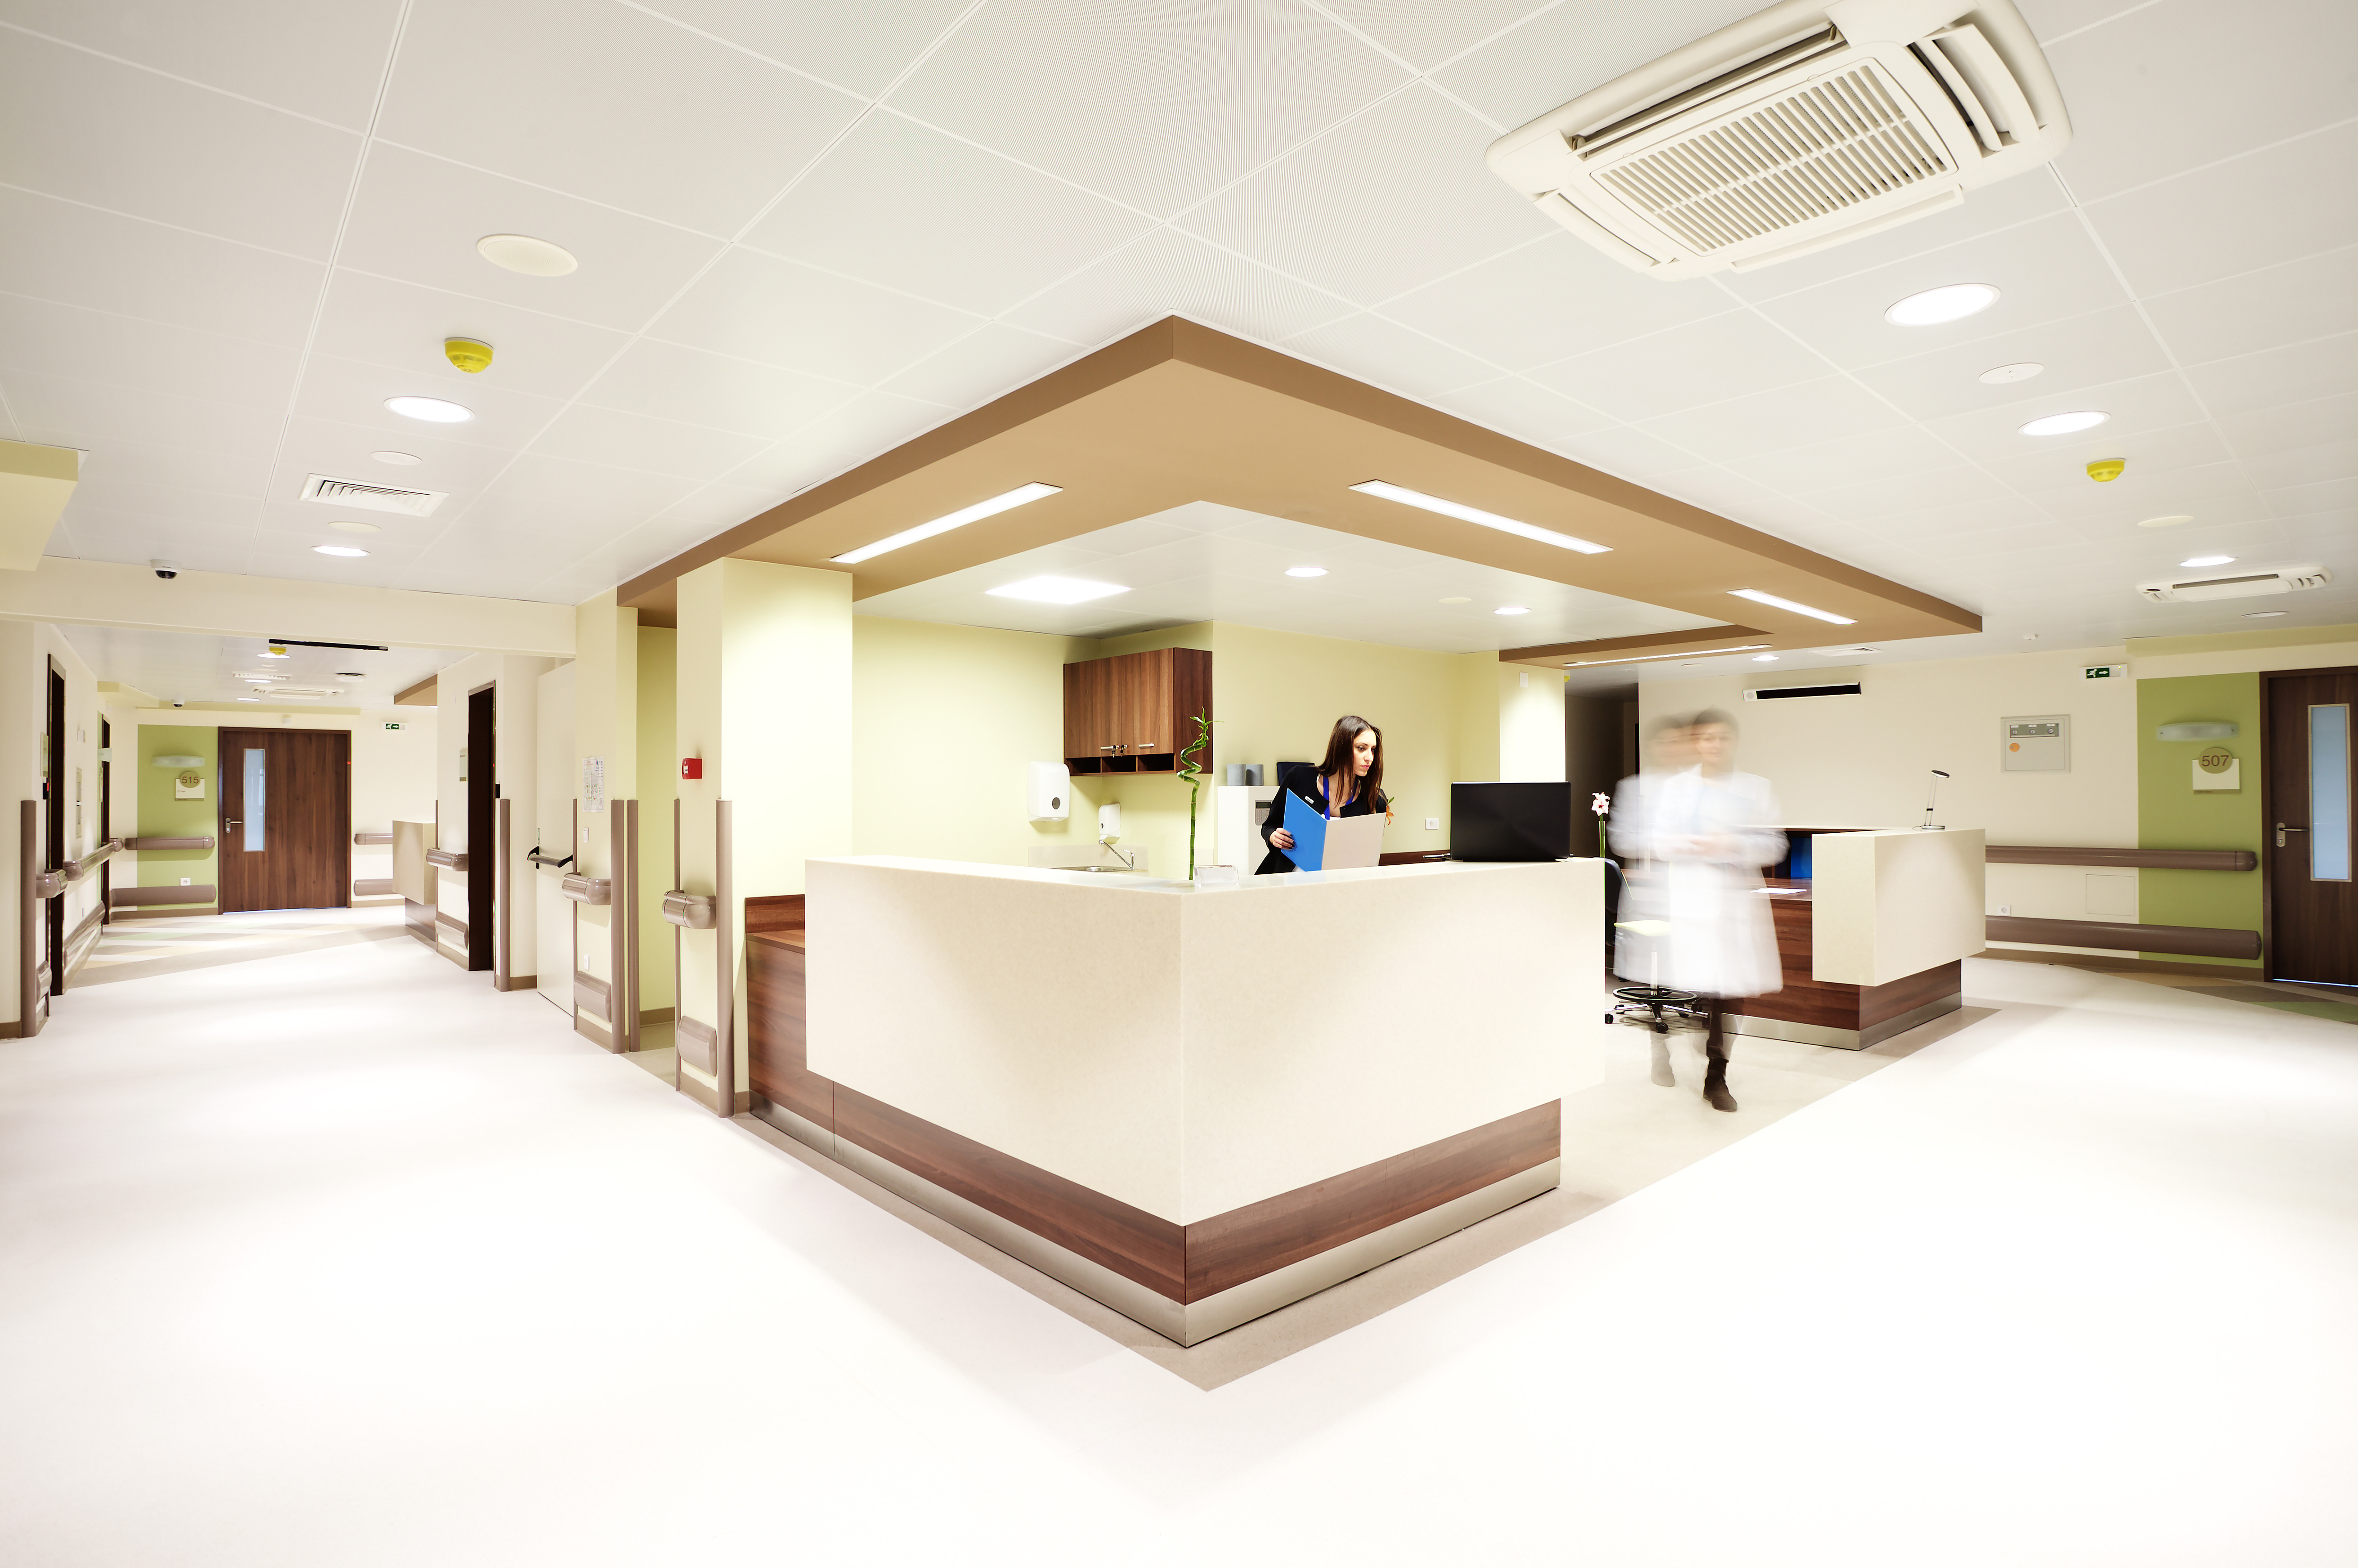 Hospital reception | Source: Shutterstock